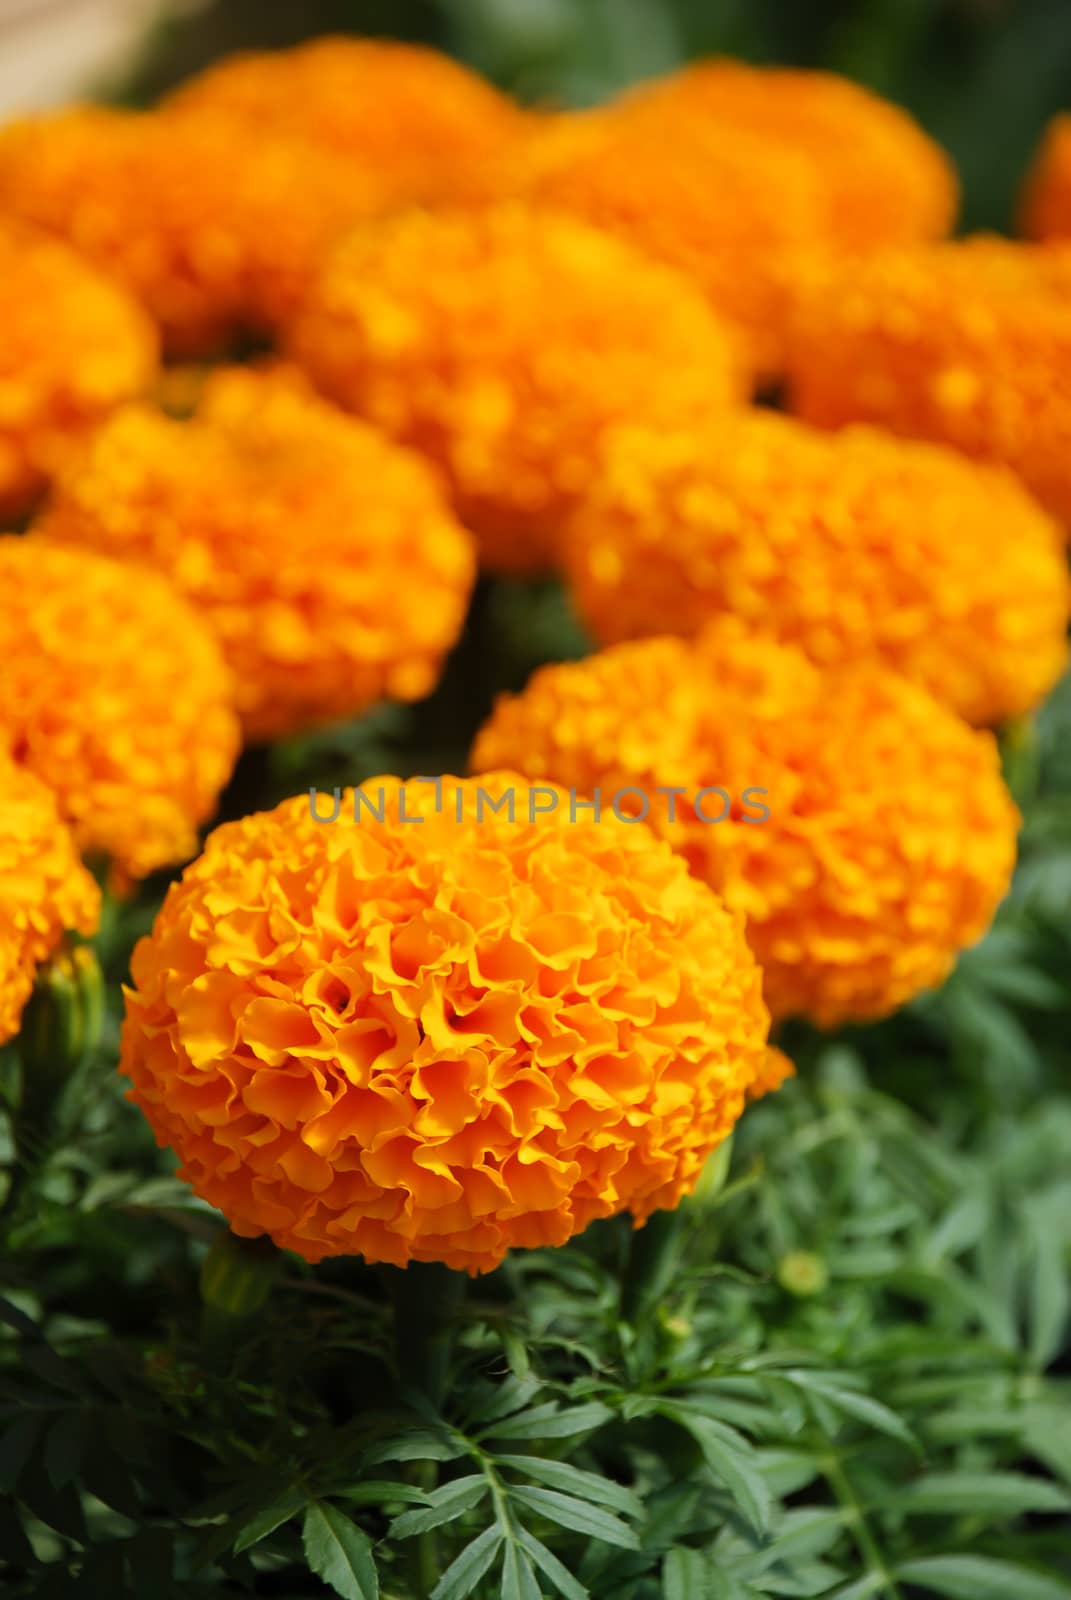 Marigolds Orange Color (Tagetes erecta, Mexican marigold) by yuiyuize